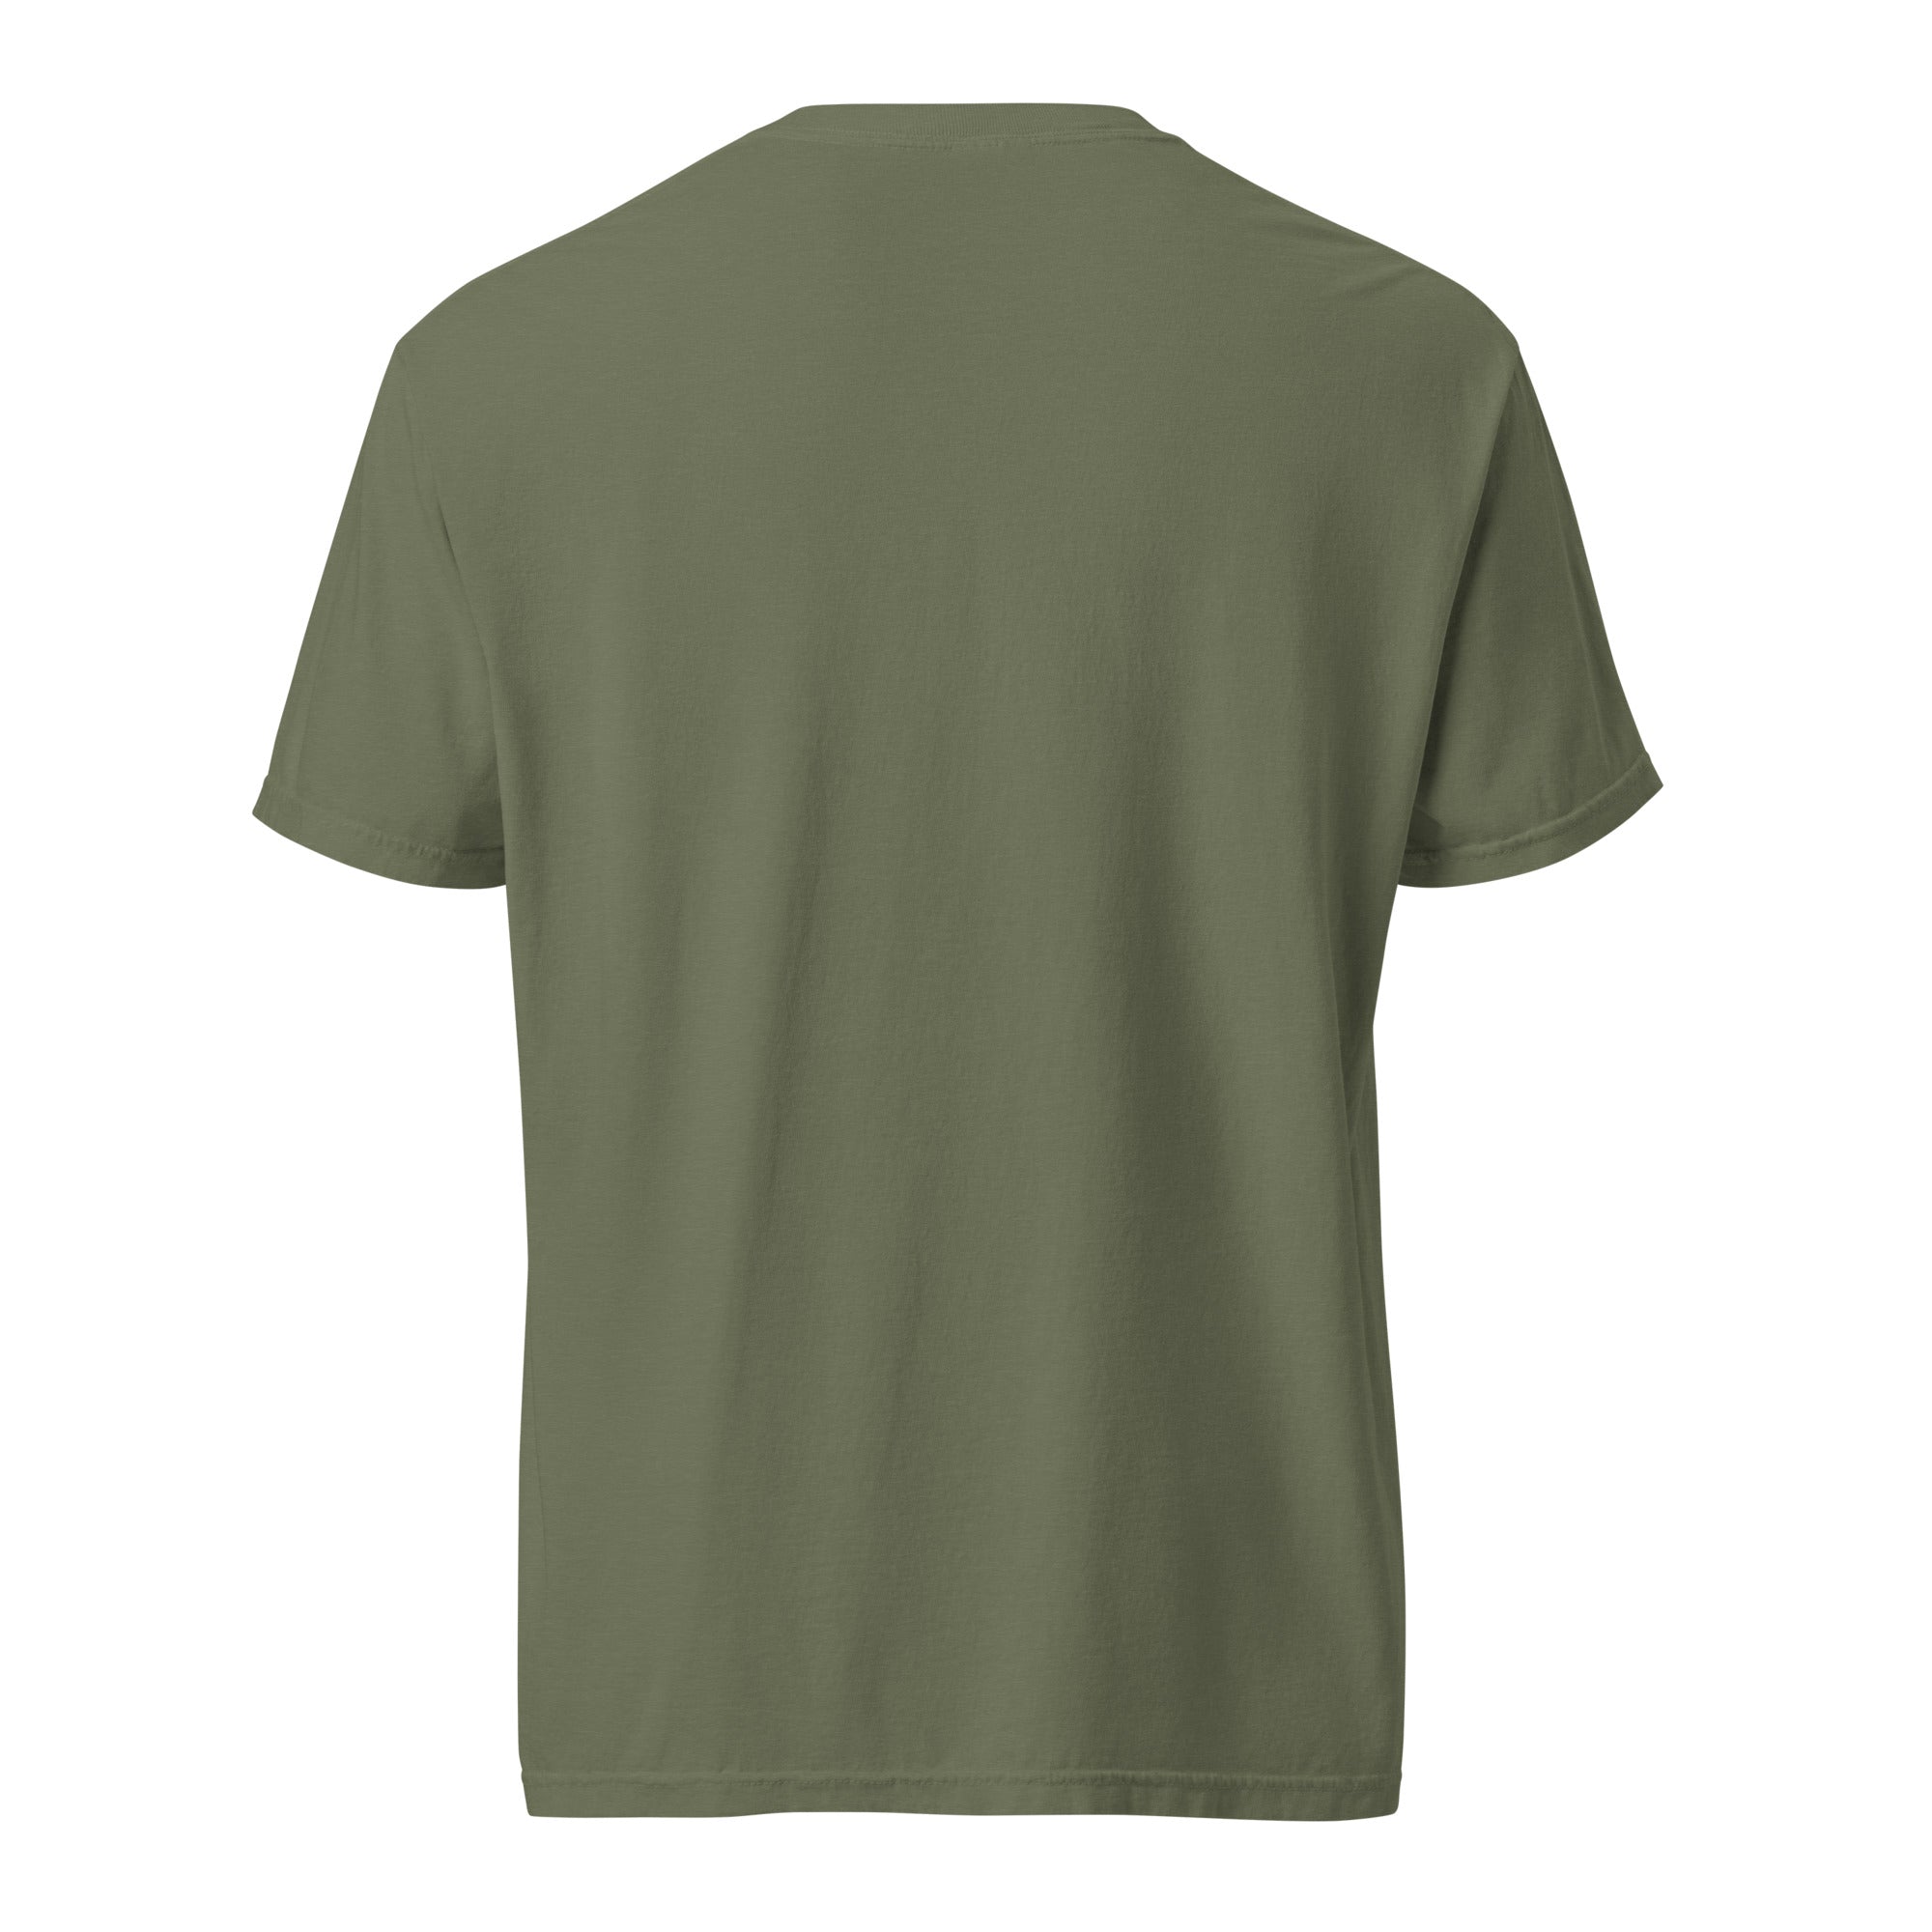 The Definition Unisex T-shirt